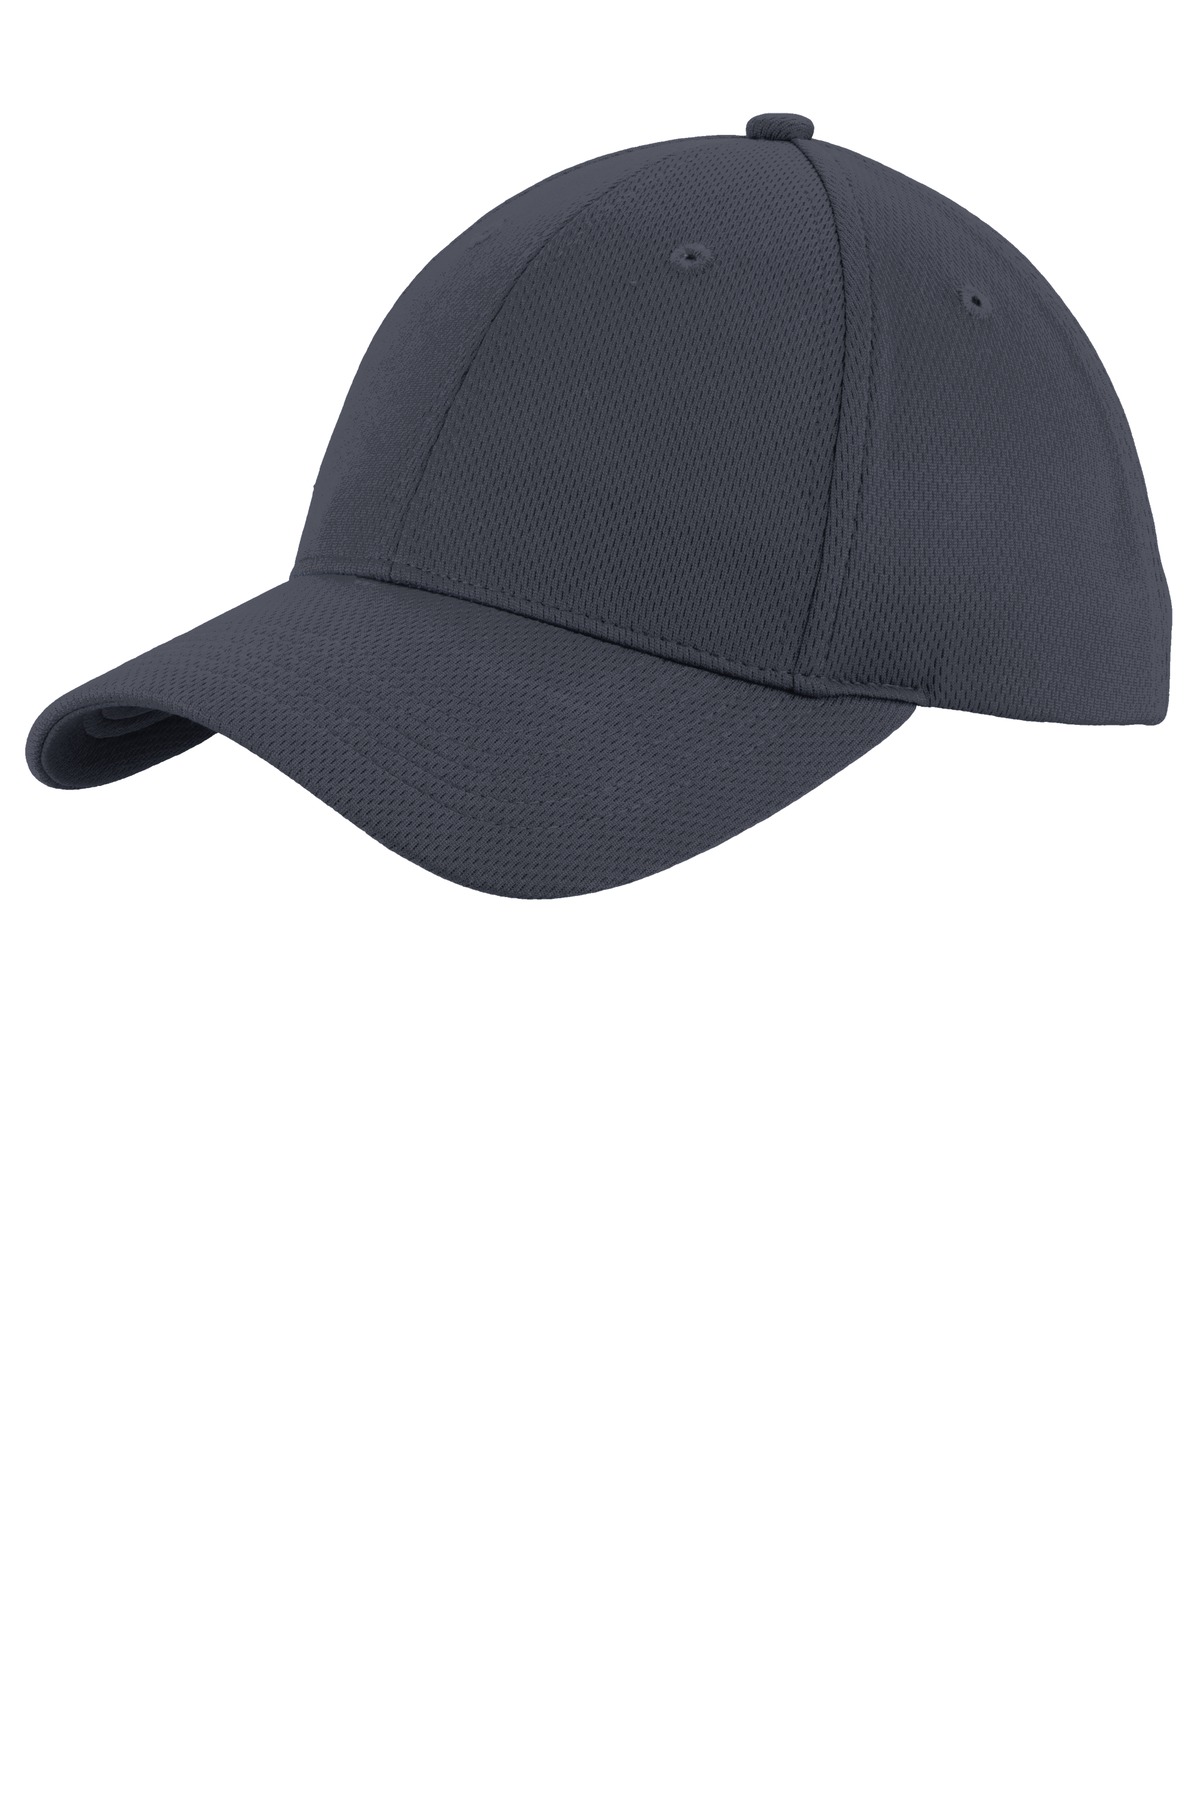 Sport-Tek Youth PosiCharge RacerMesh Cap-One Size (Graphite Grey) - image 1 of 3